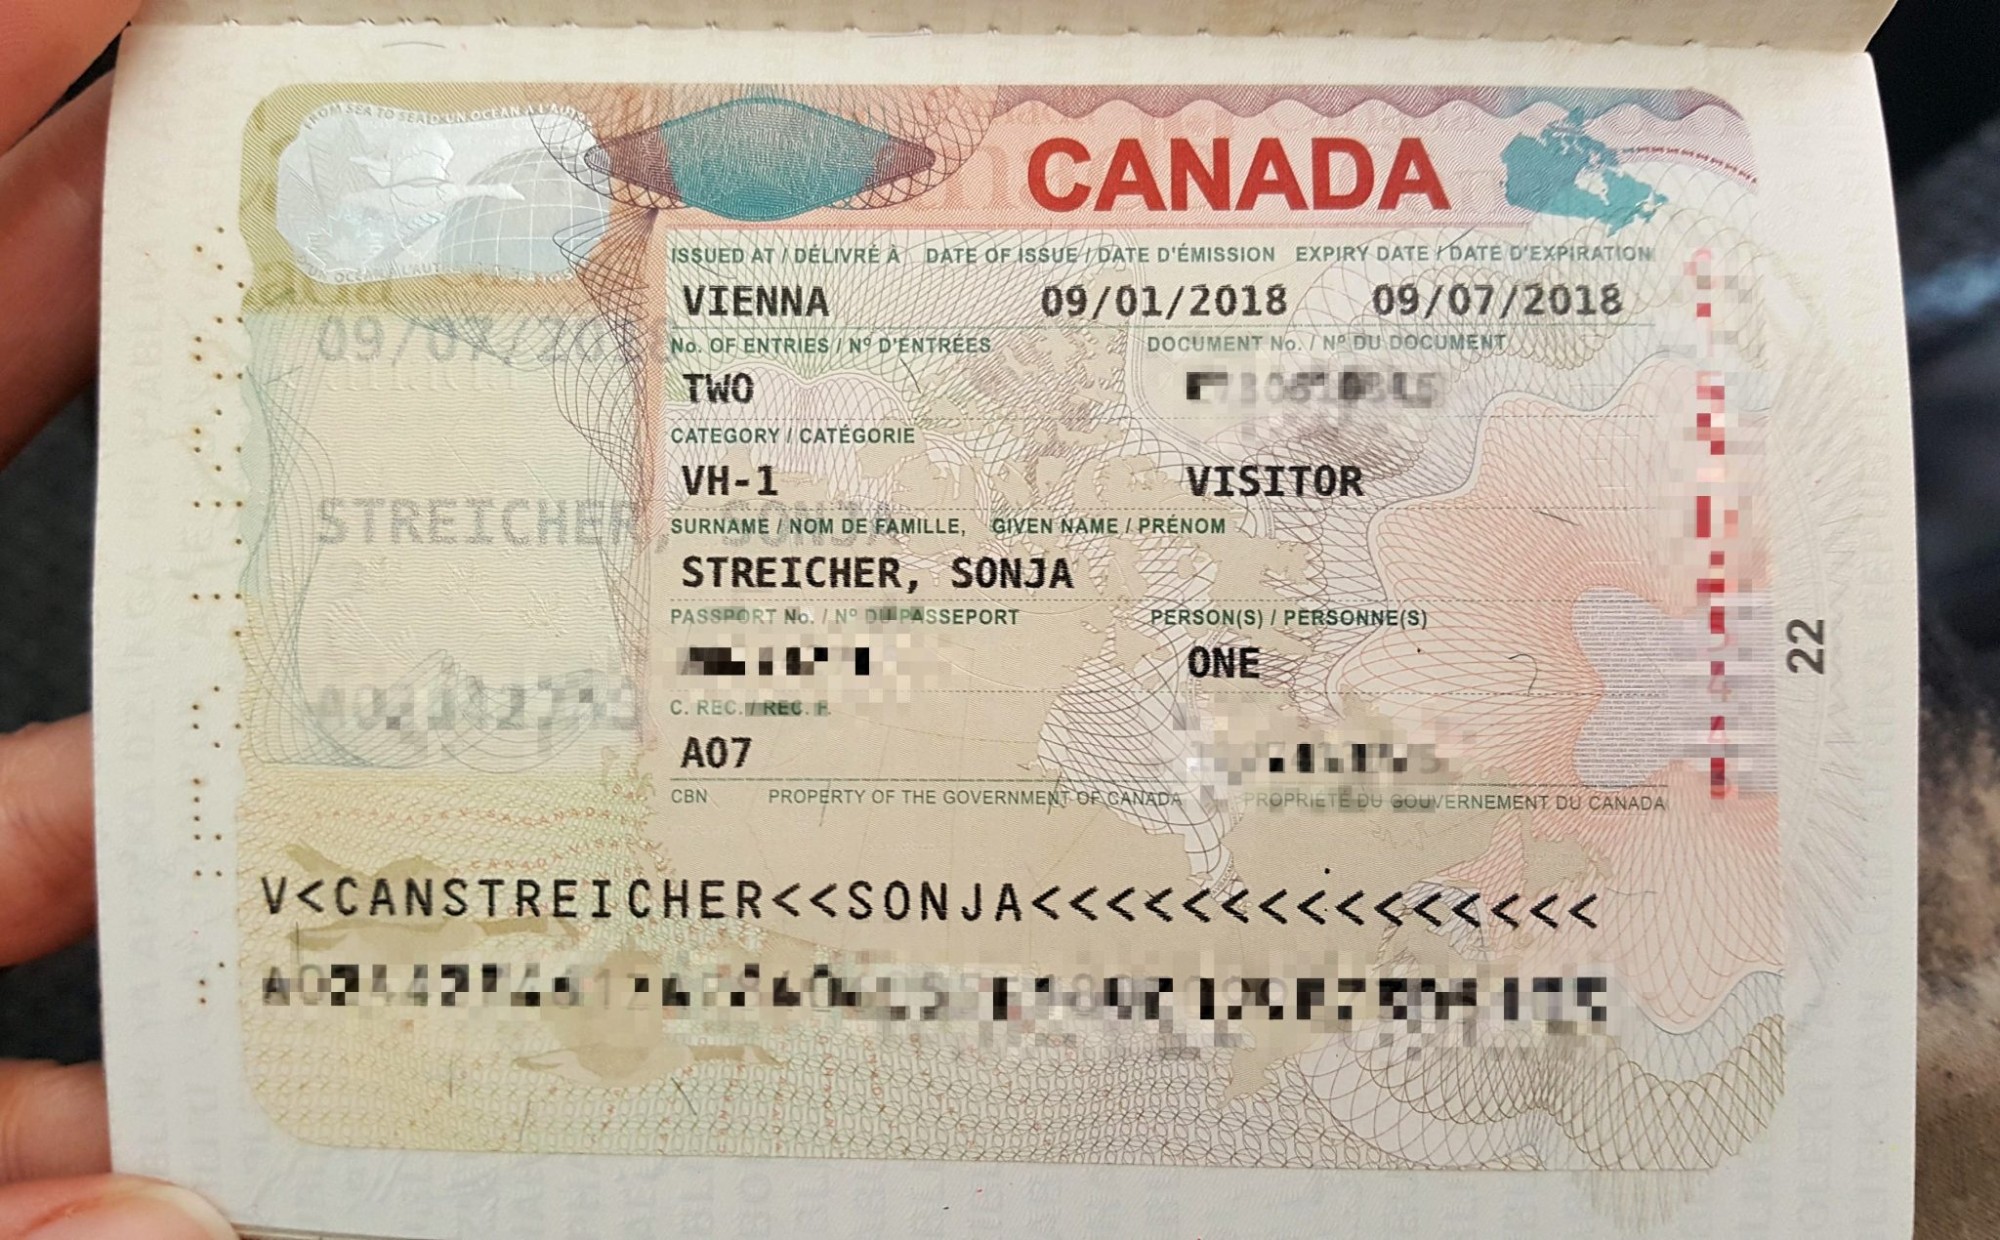 Visa canada